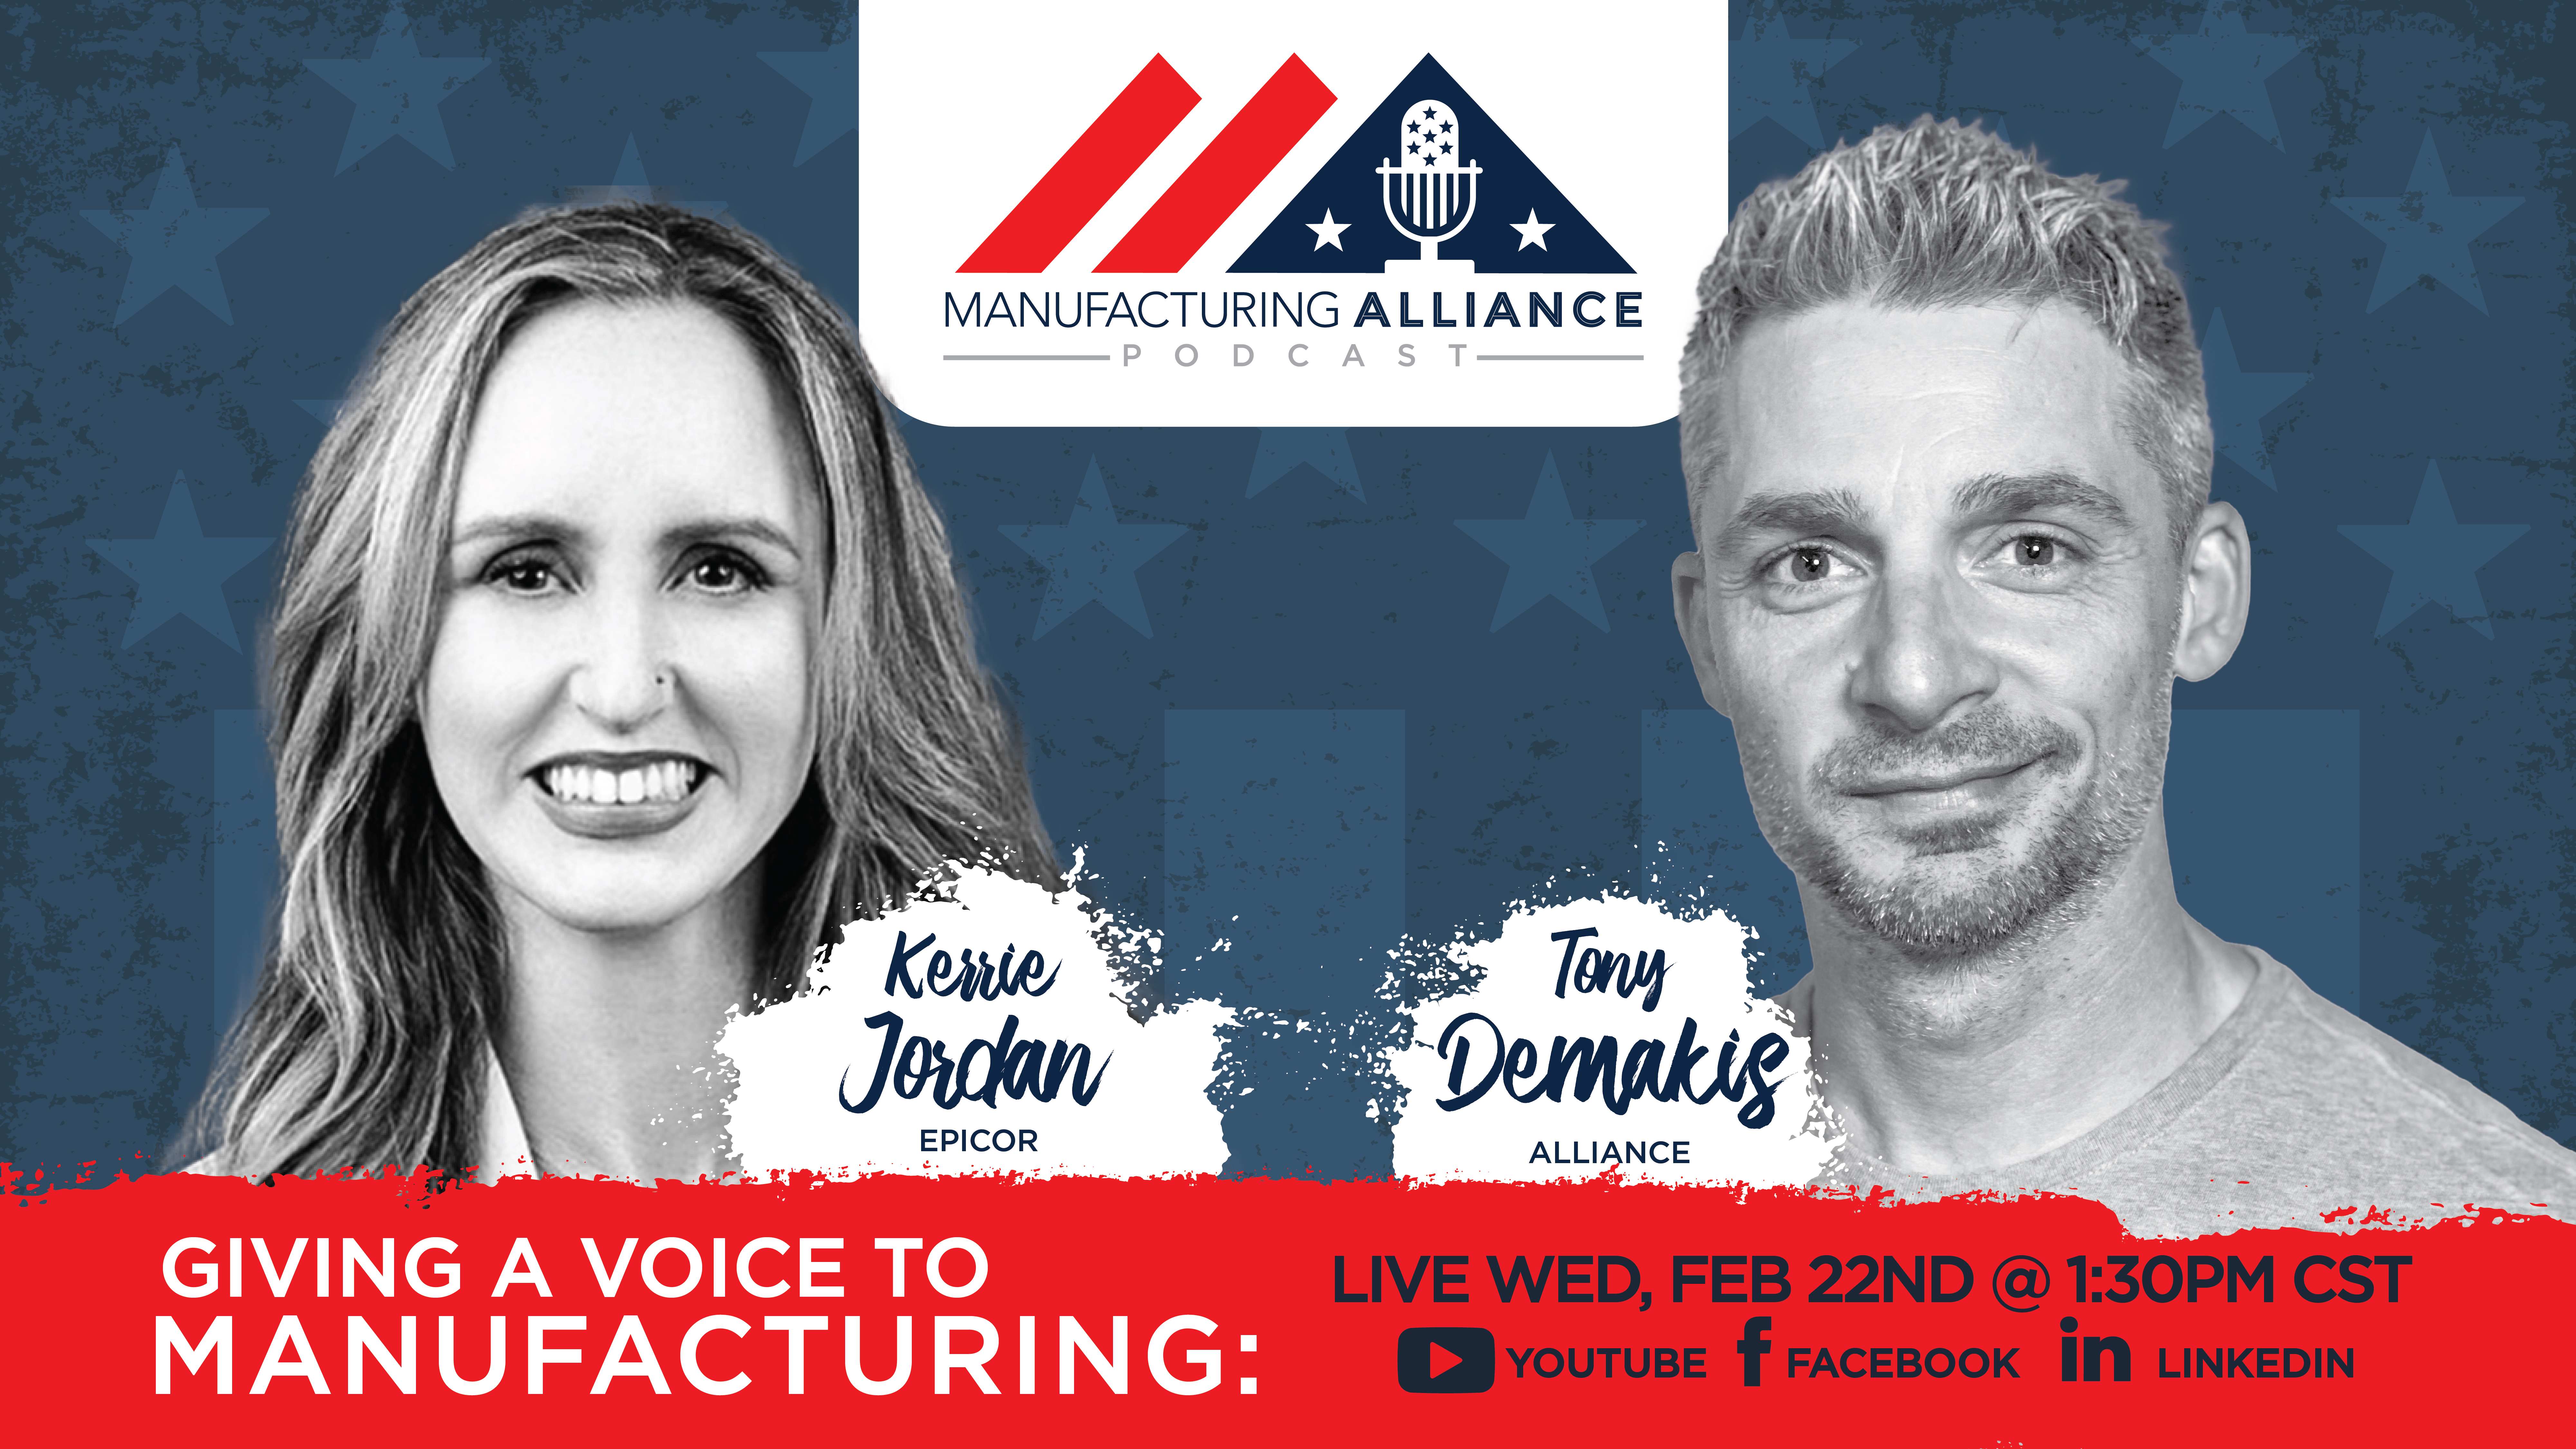 The Manufacturing Alliance Podcast Presents: Kerrie Jordan | Epicor